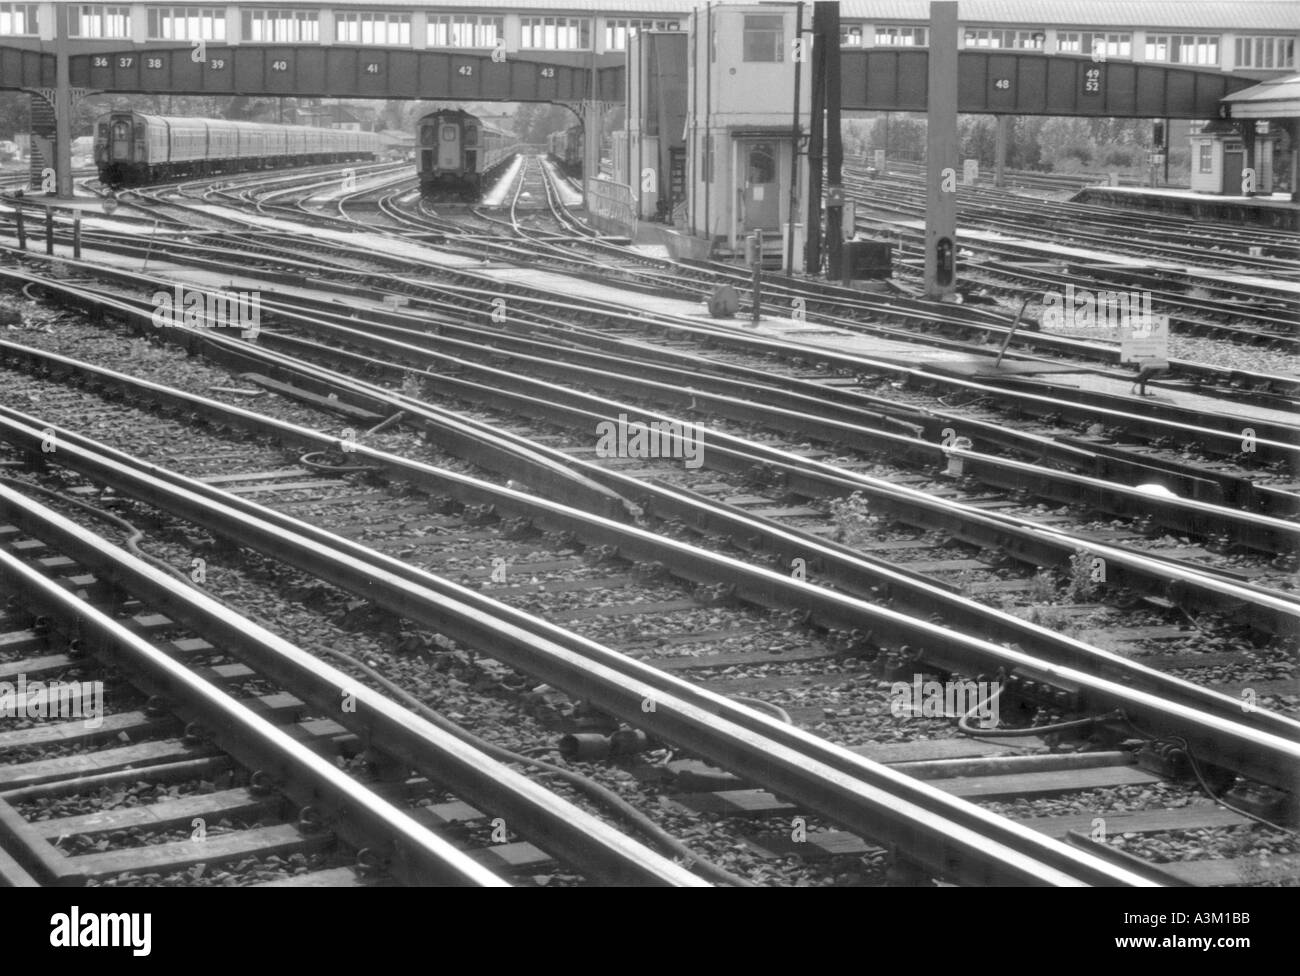 Rail Stock Photo